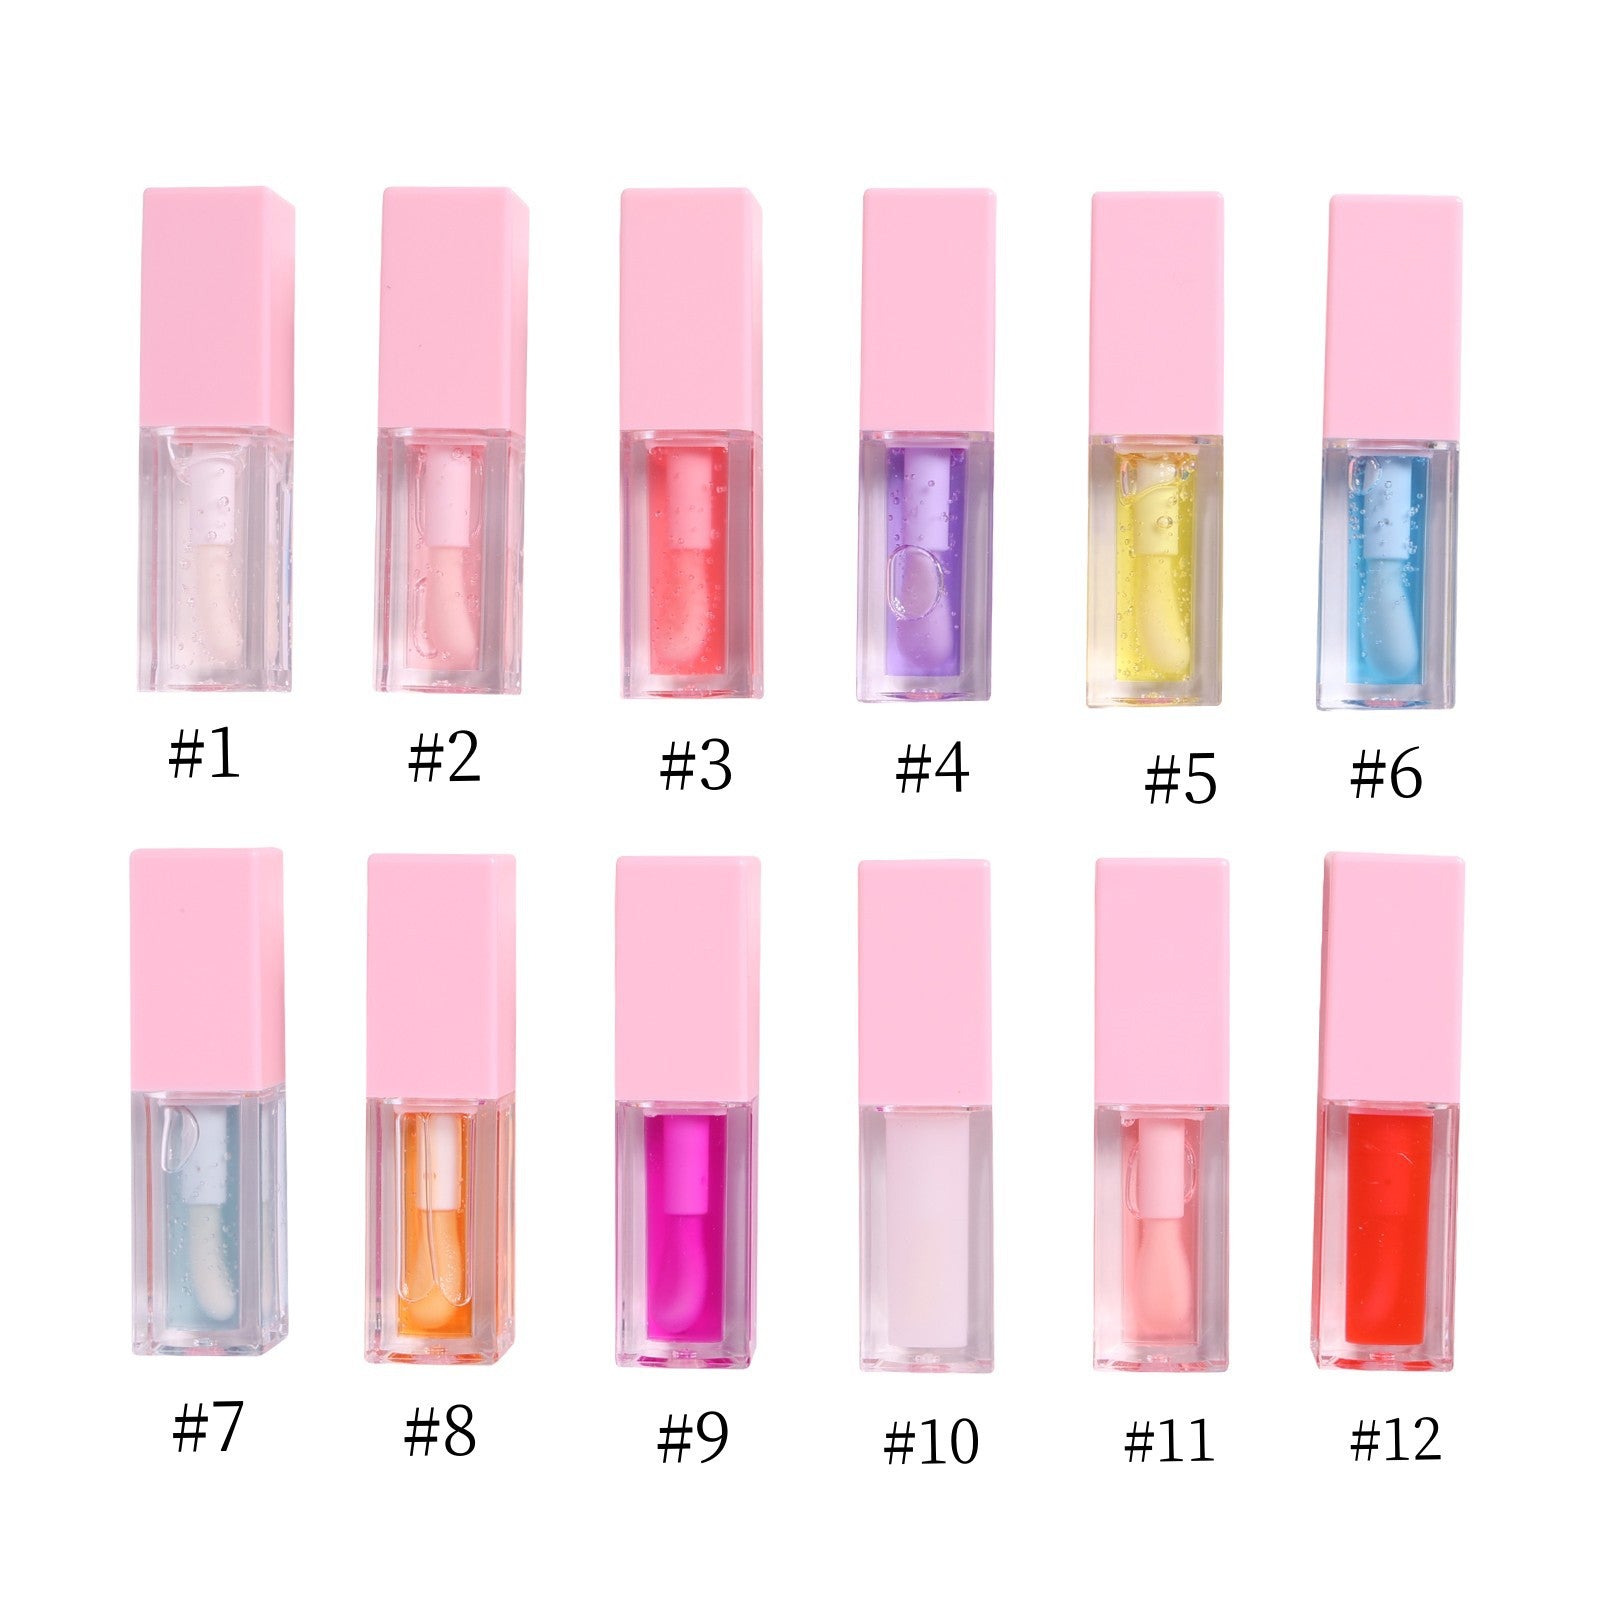 Clear Lip Plumping Oil Sample Kit - 3 Farbtöne, 5 Farbtöne, 12 Farbtöne